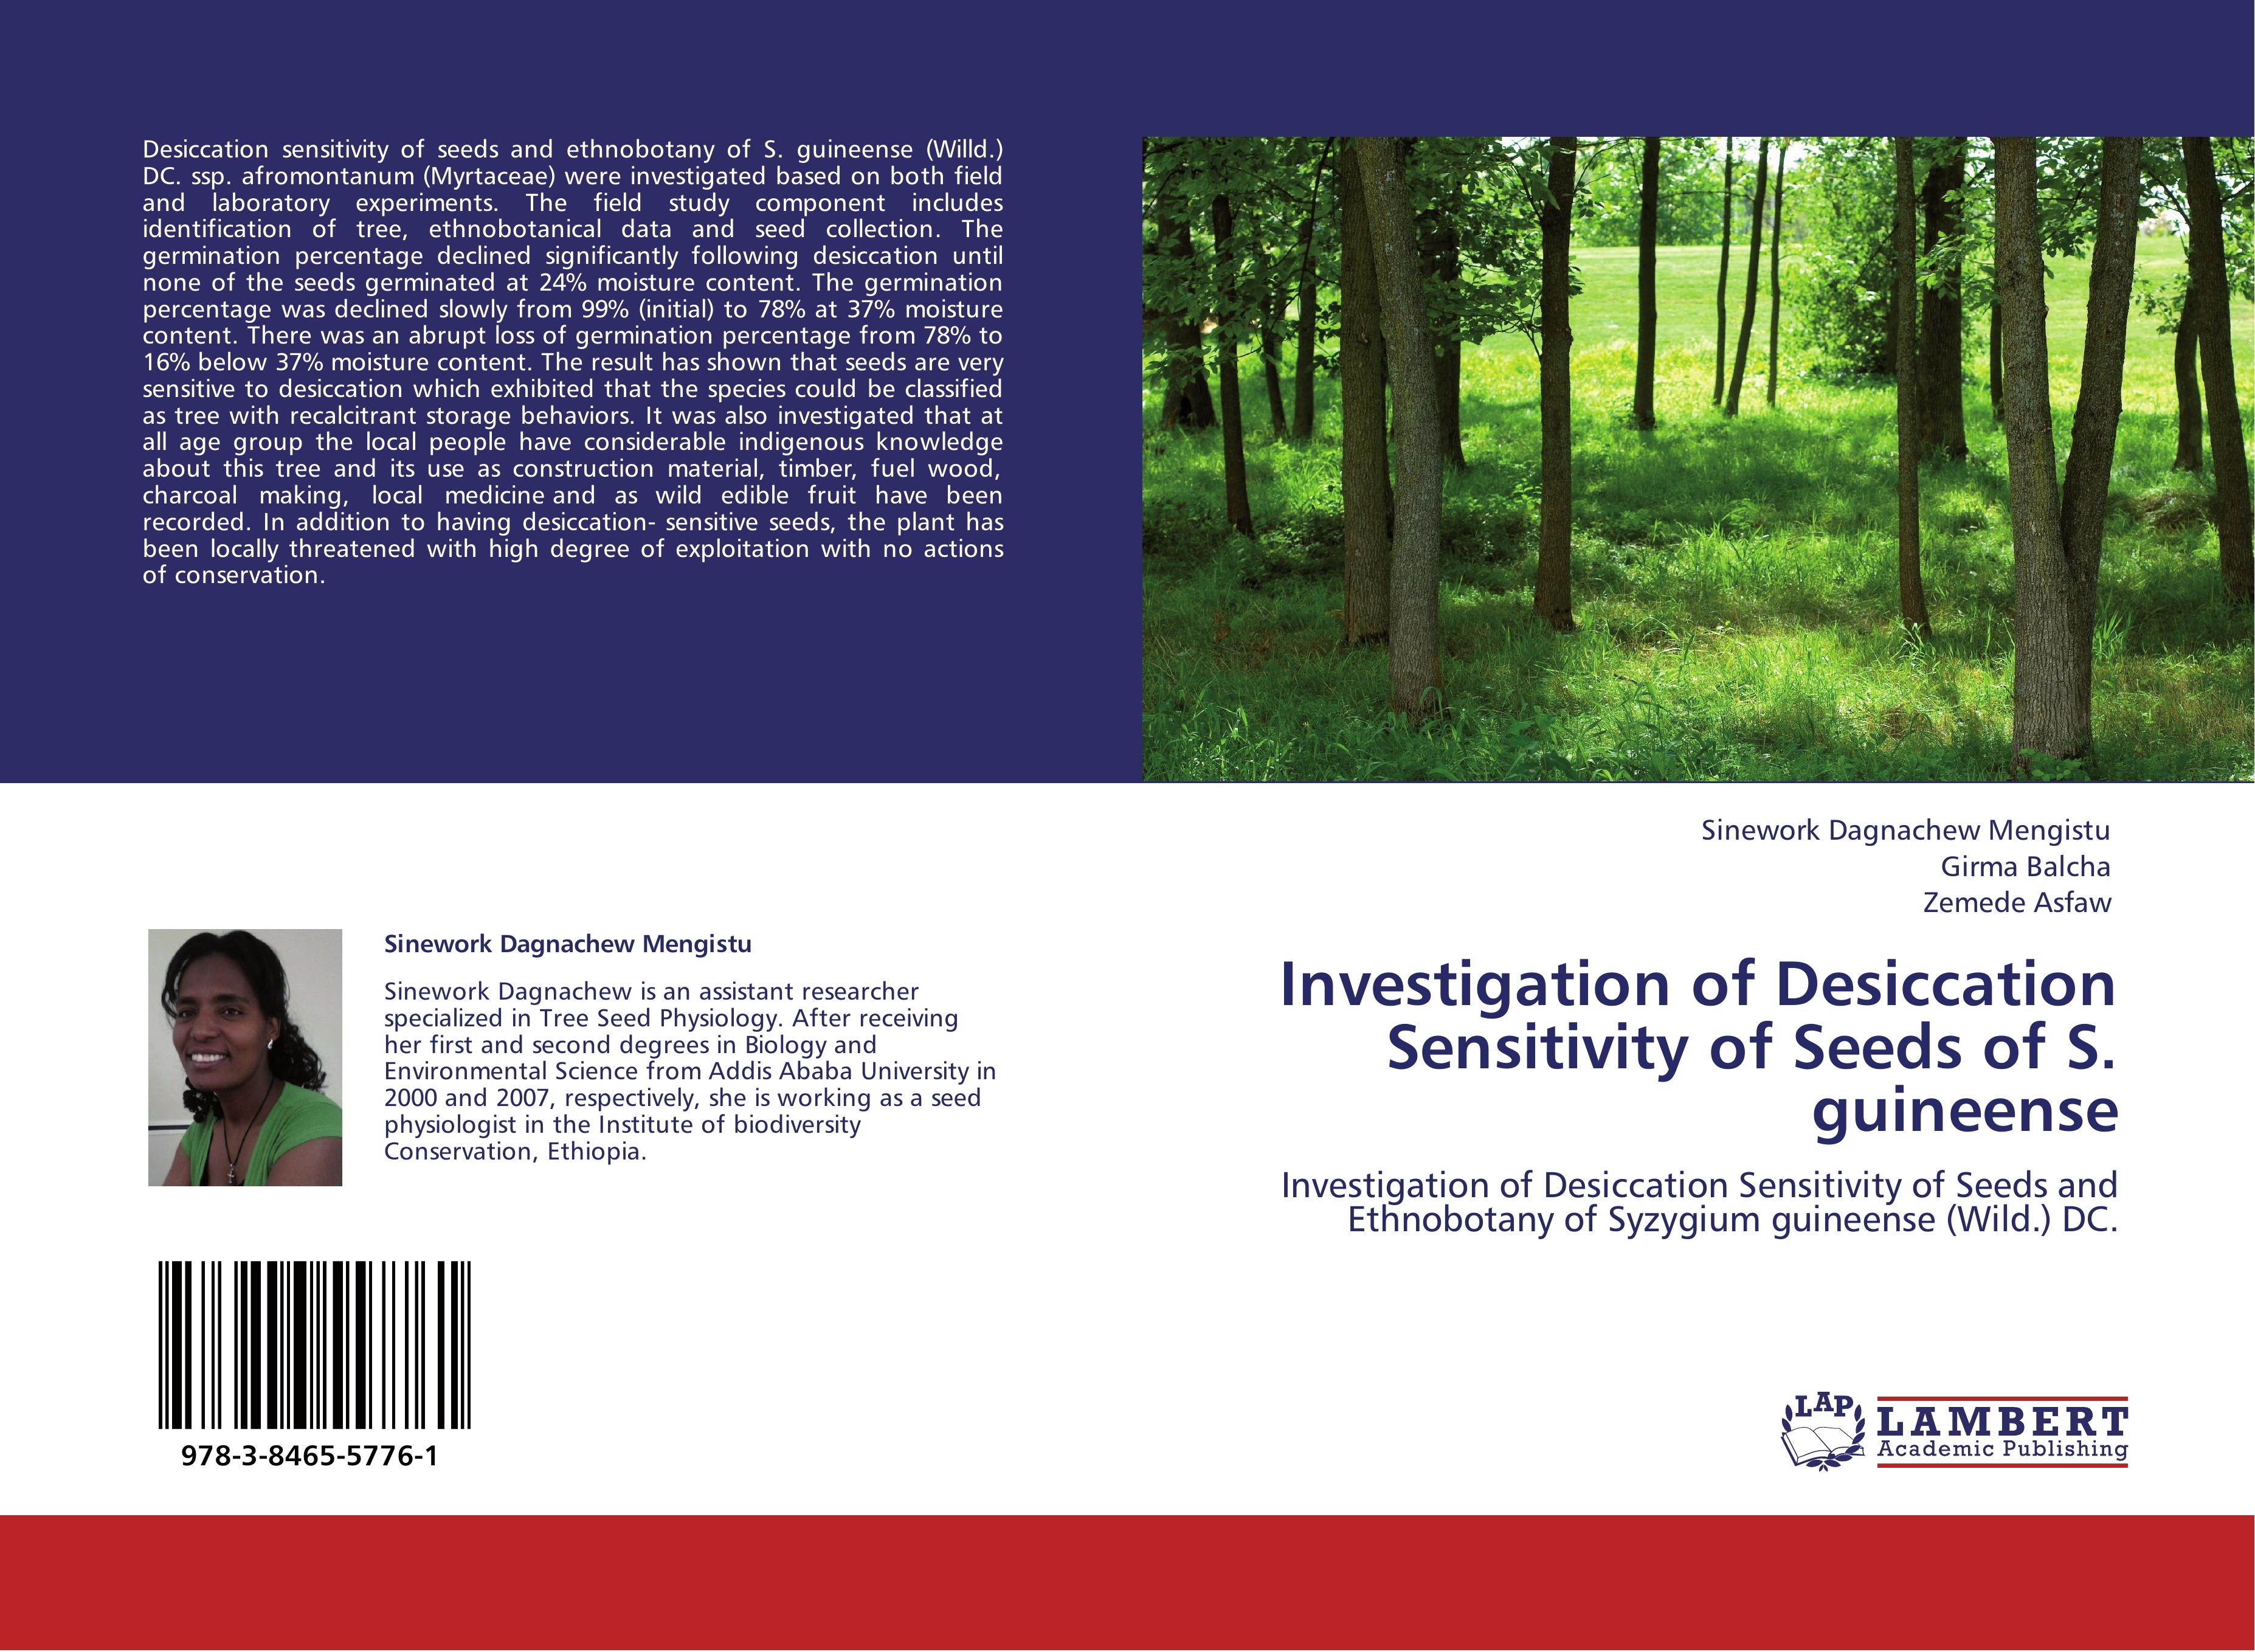 Investigation of Desiccation Sensitivity of Seeds of S. guineense - Mengistu, Sinework Dagnachew|Balcha, Girma|Asfaw, Zemede